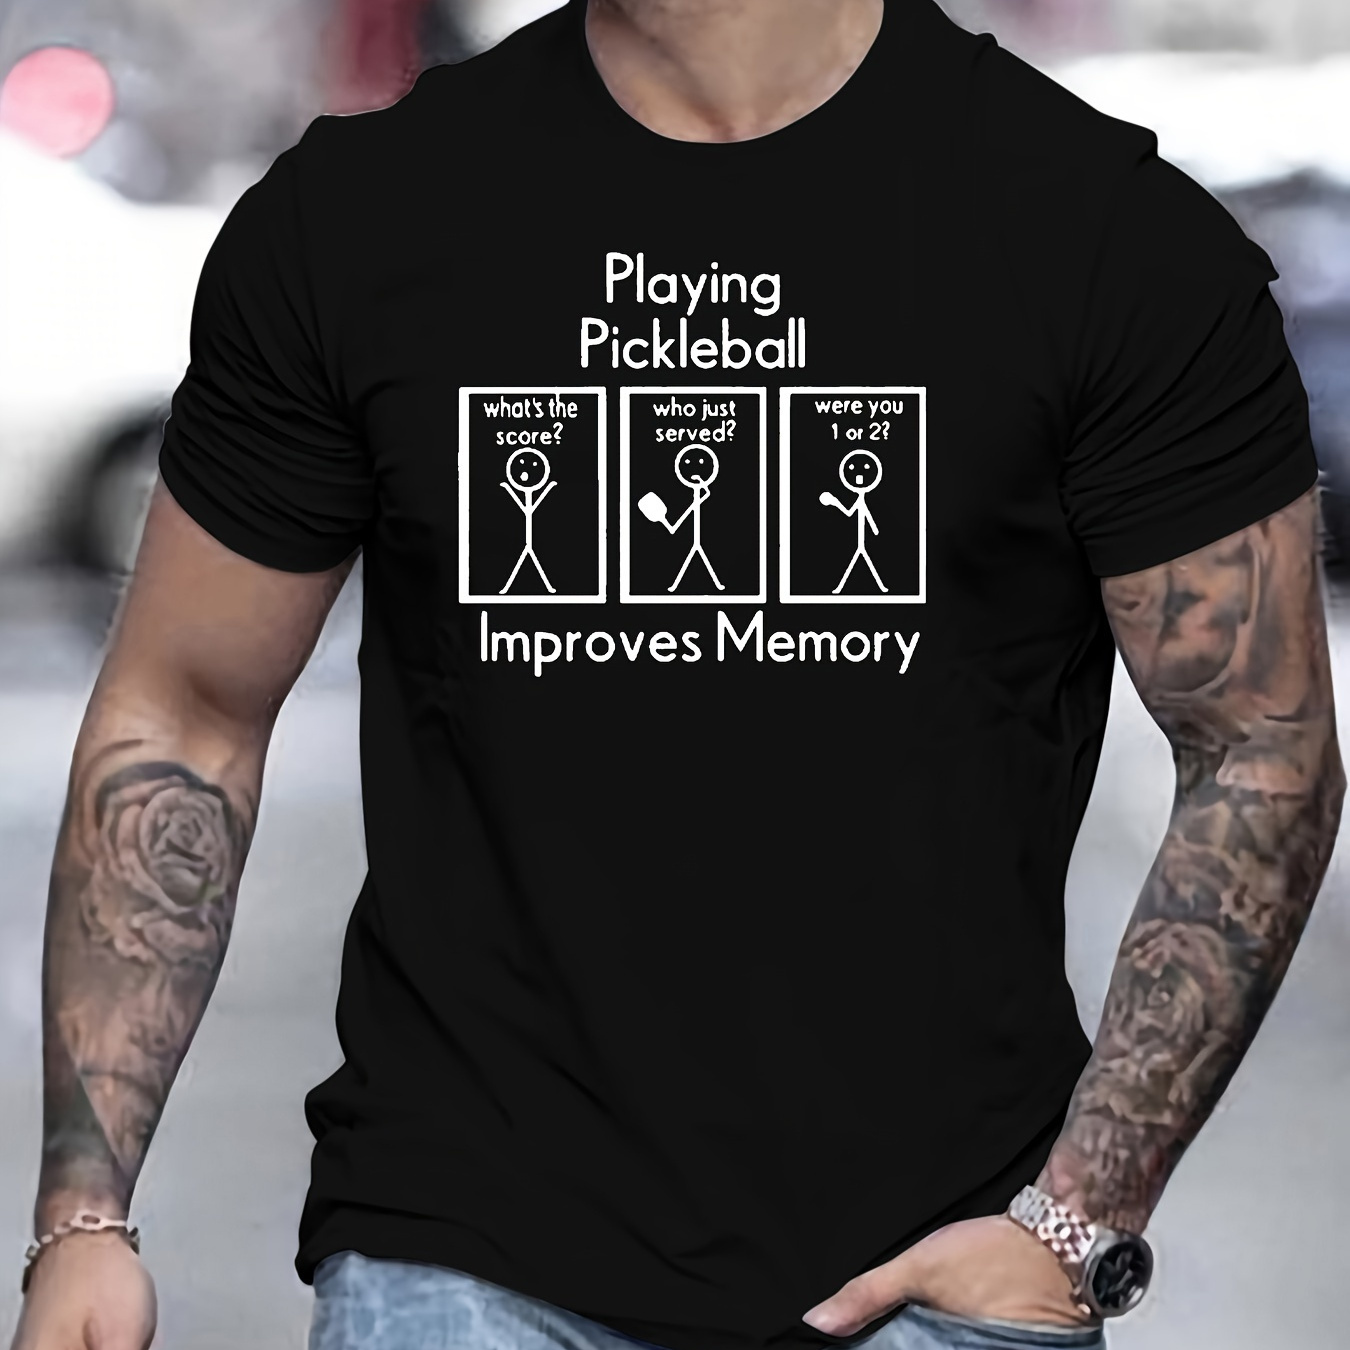 

Playing Pickleball Improves Memory Print T Shirt, Tees For Men, Casual Short Sleeve T-shirt For Summer